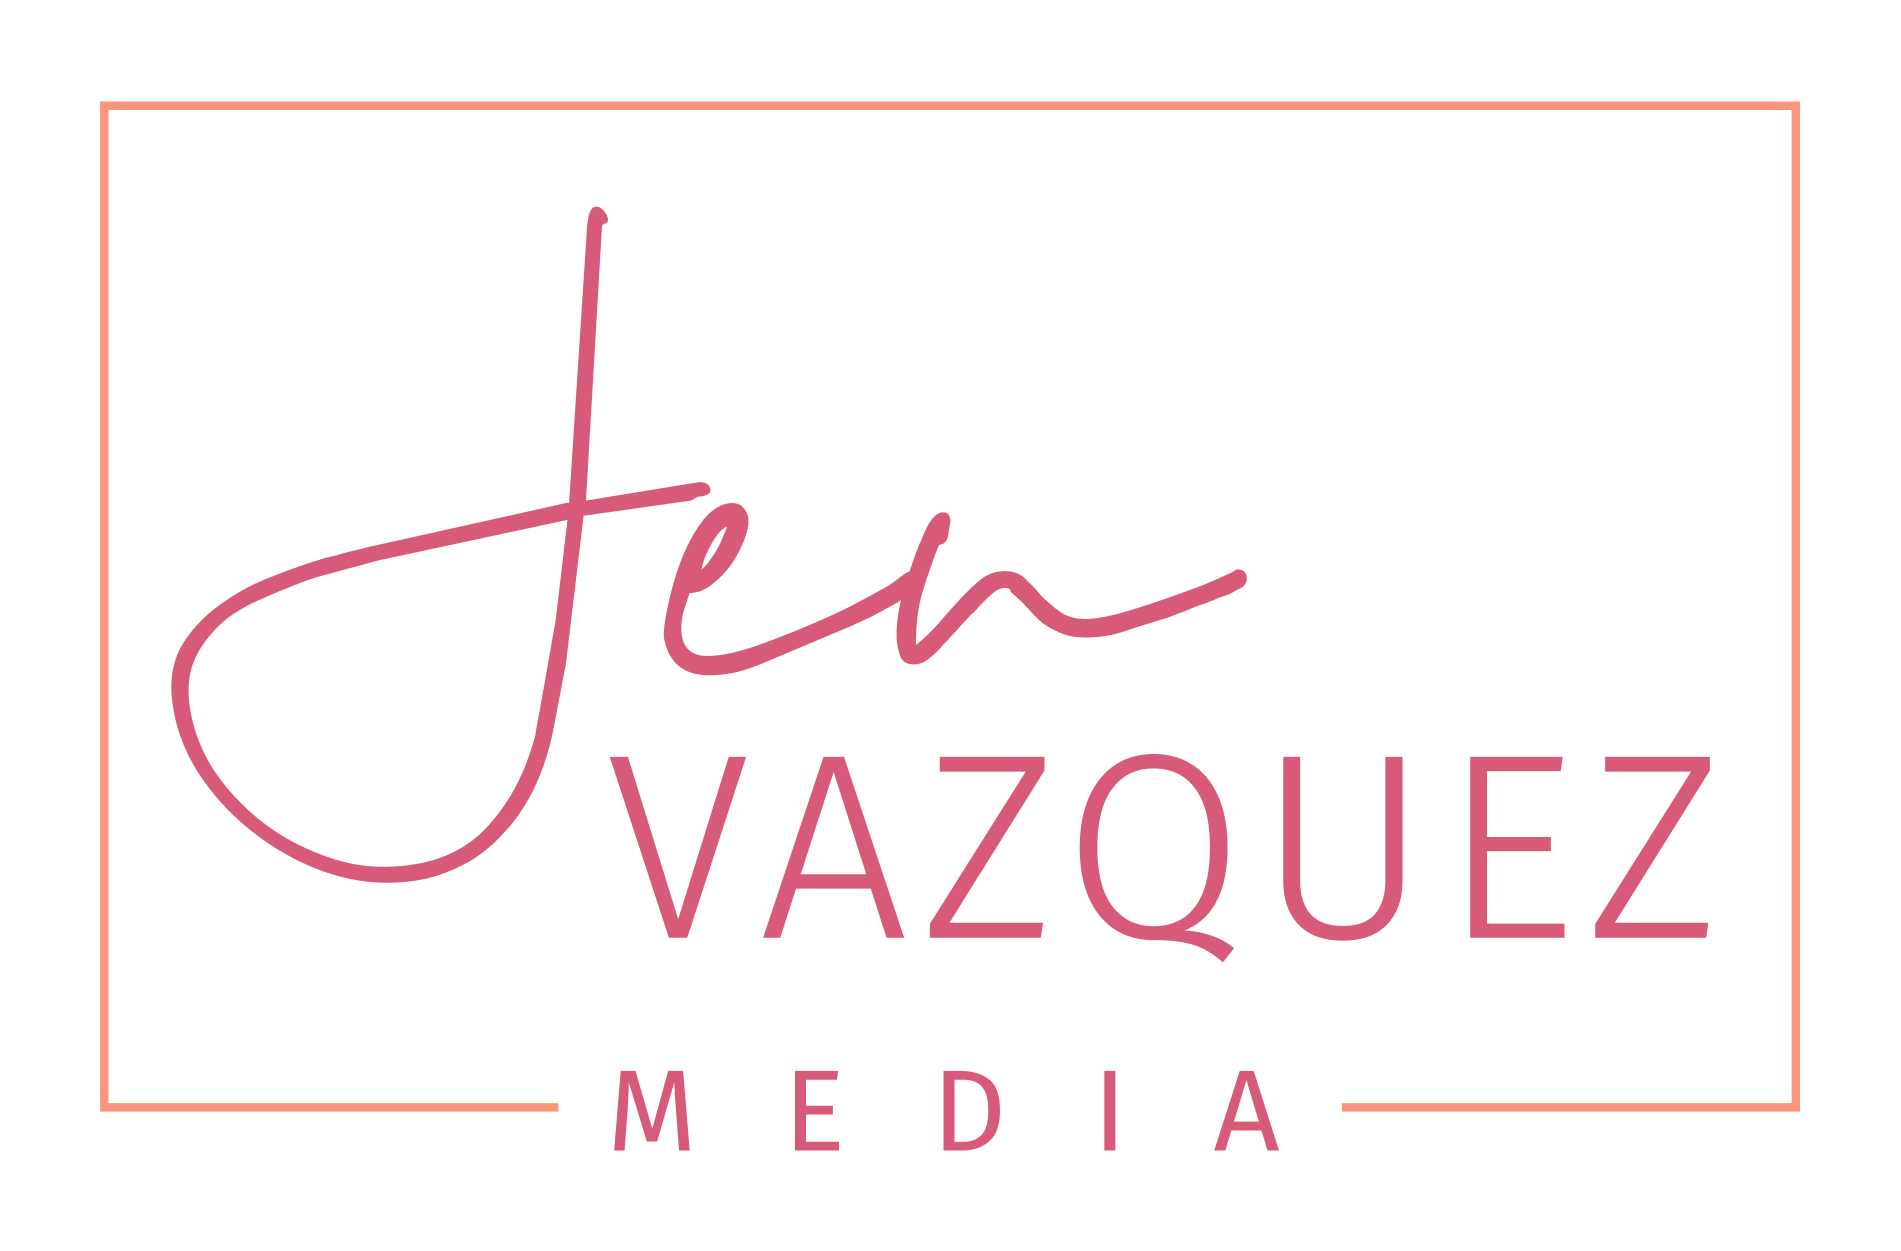 Jen Vazquez Media | Pinterest Management + Marketing Strategist